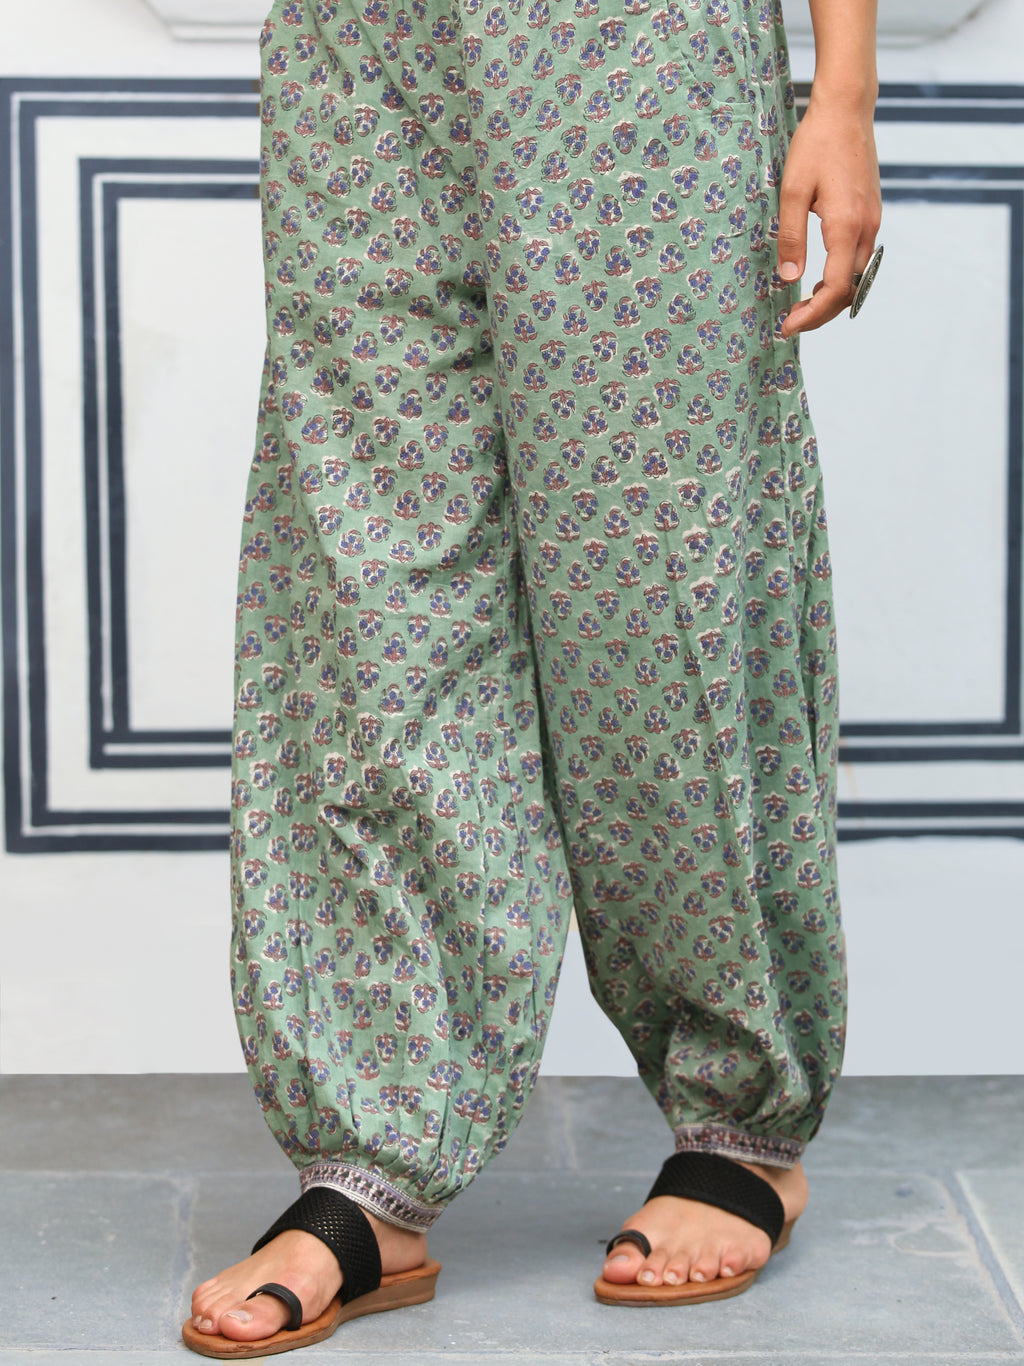 Bollywood Designer Sharara Salwar Indian Pakistani Stylish Bottom Shalwar  Pants | eBay